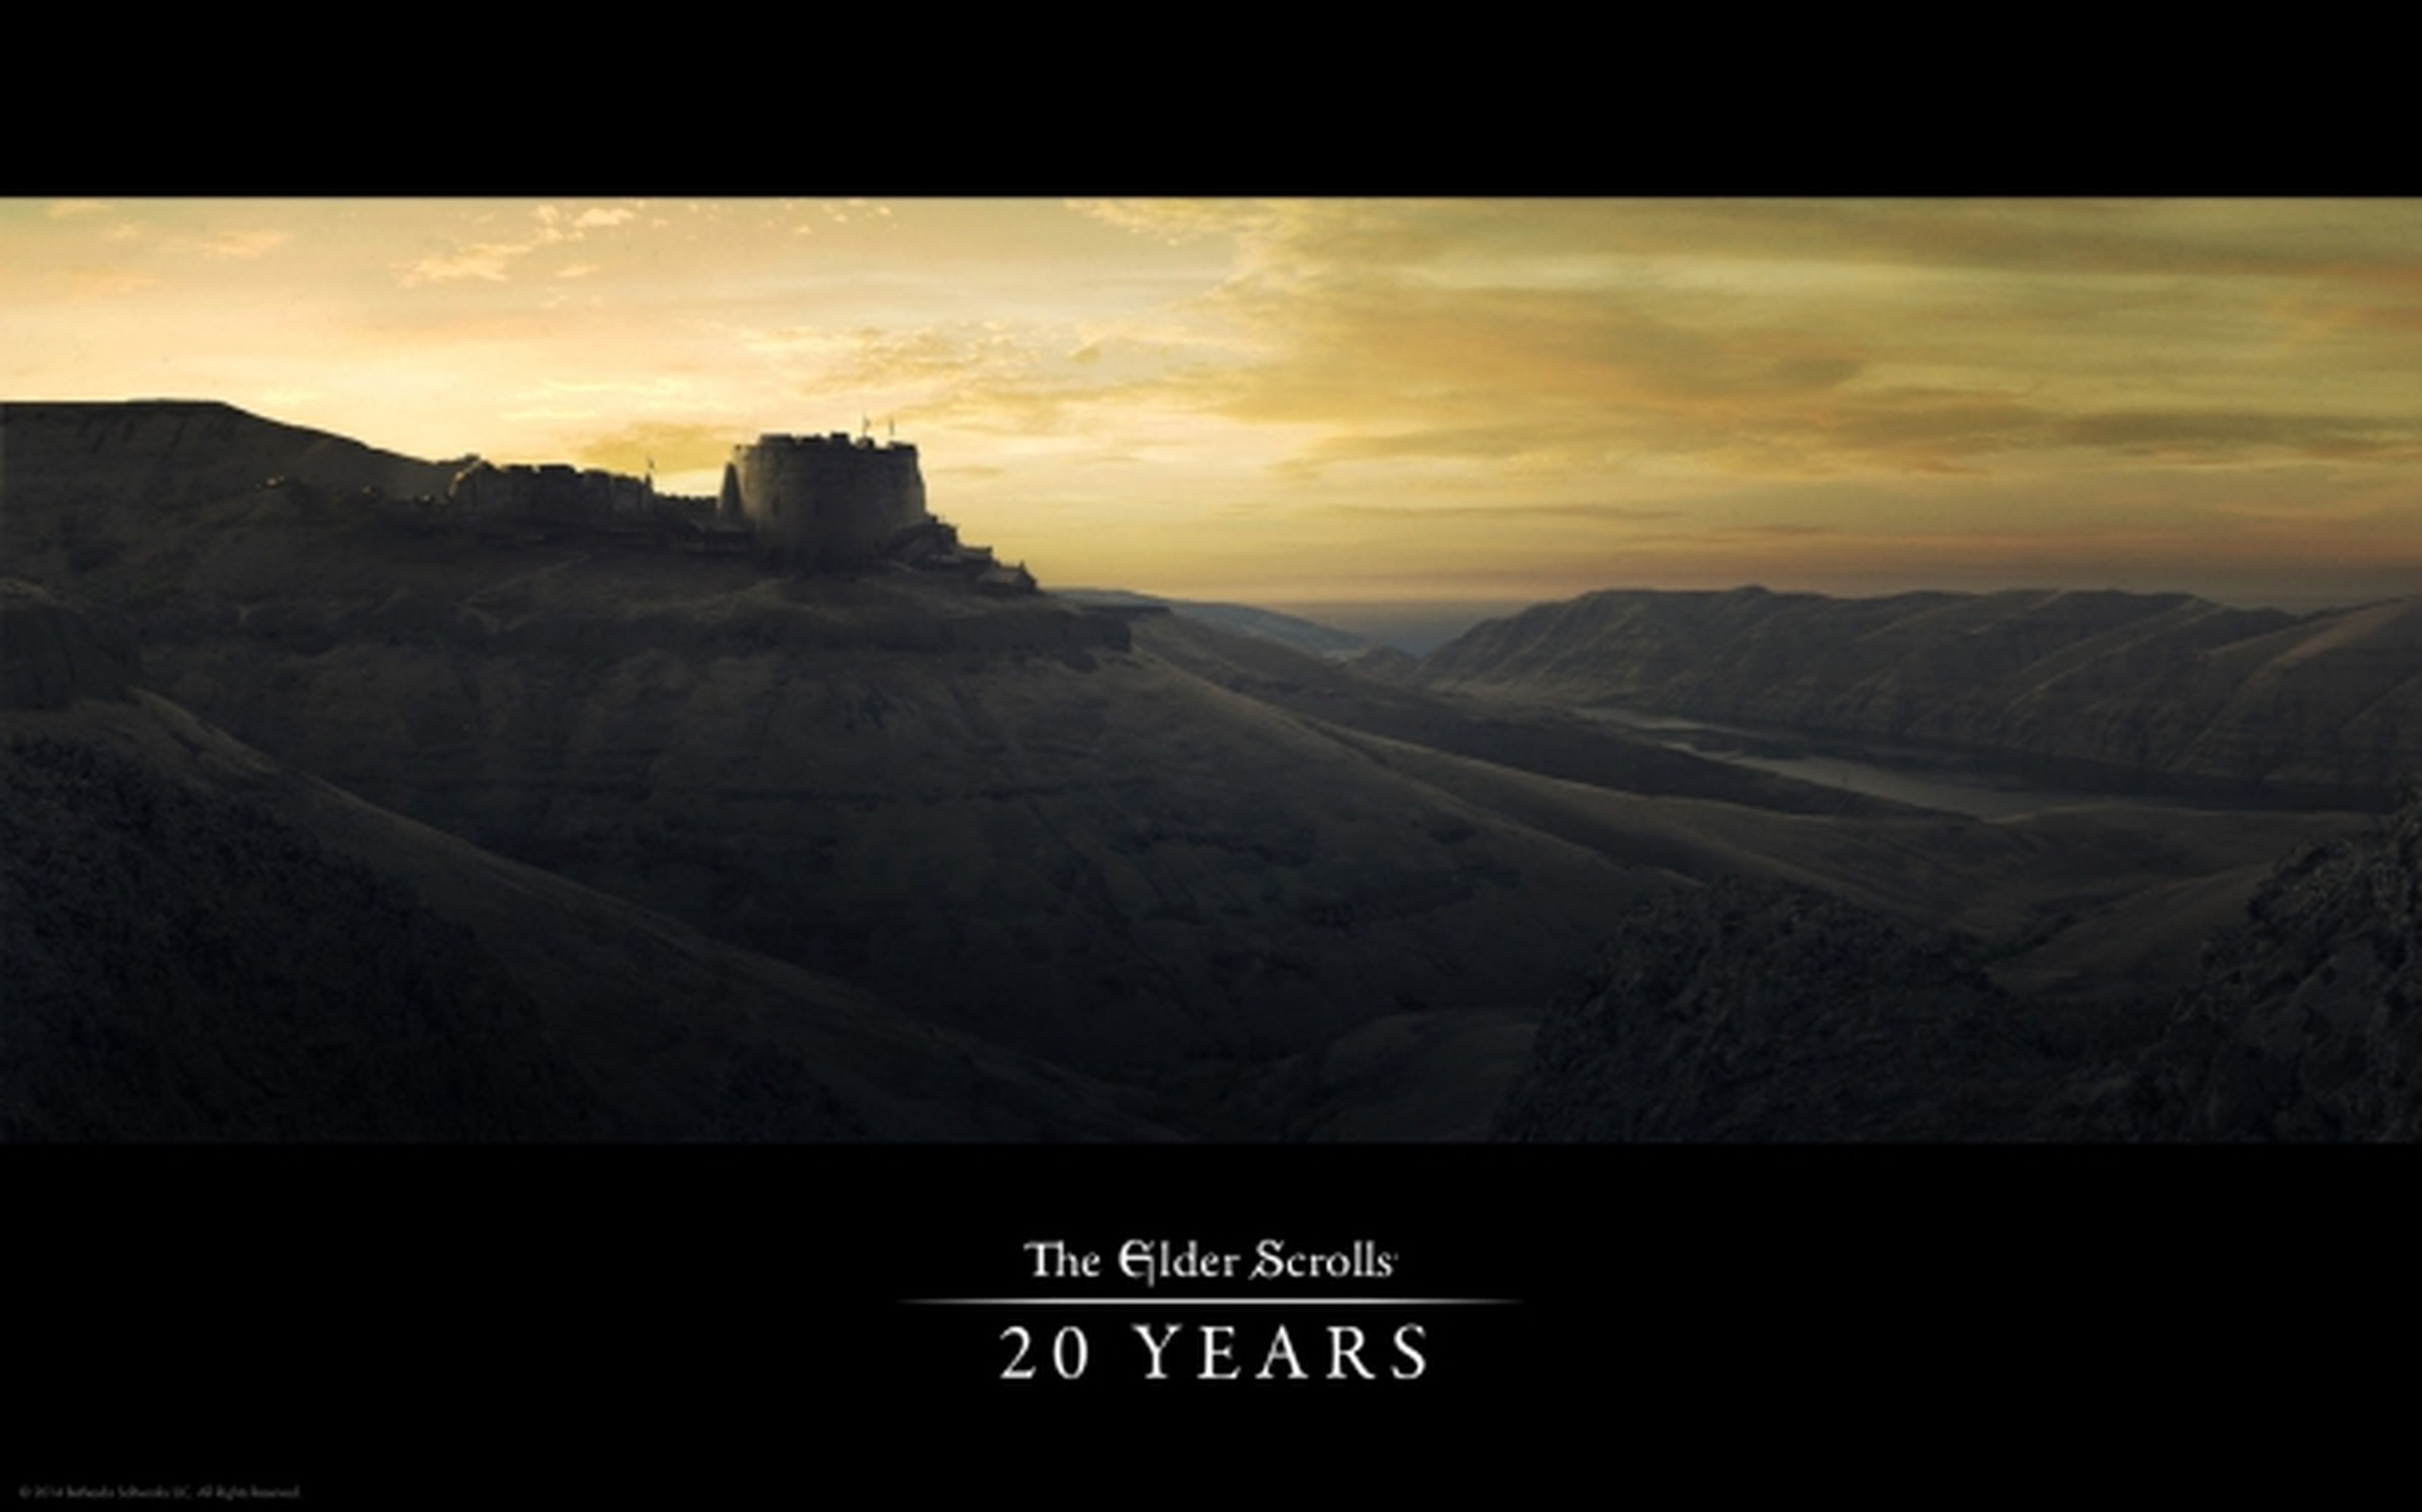 The Elder Scrolls celebra su 20 aniversario